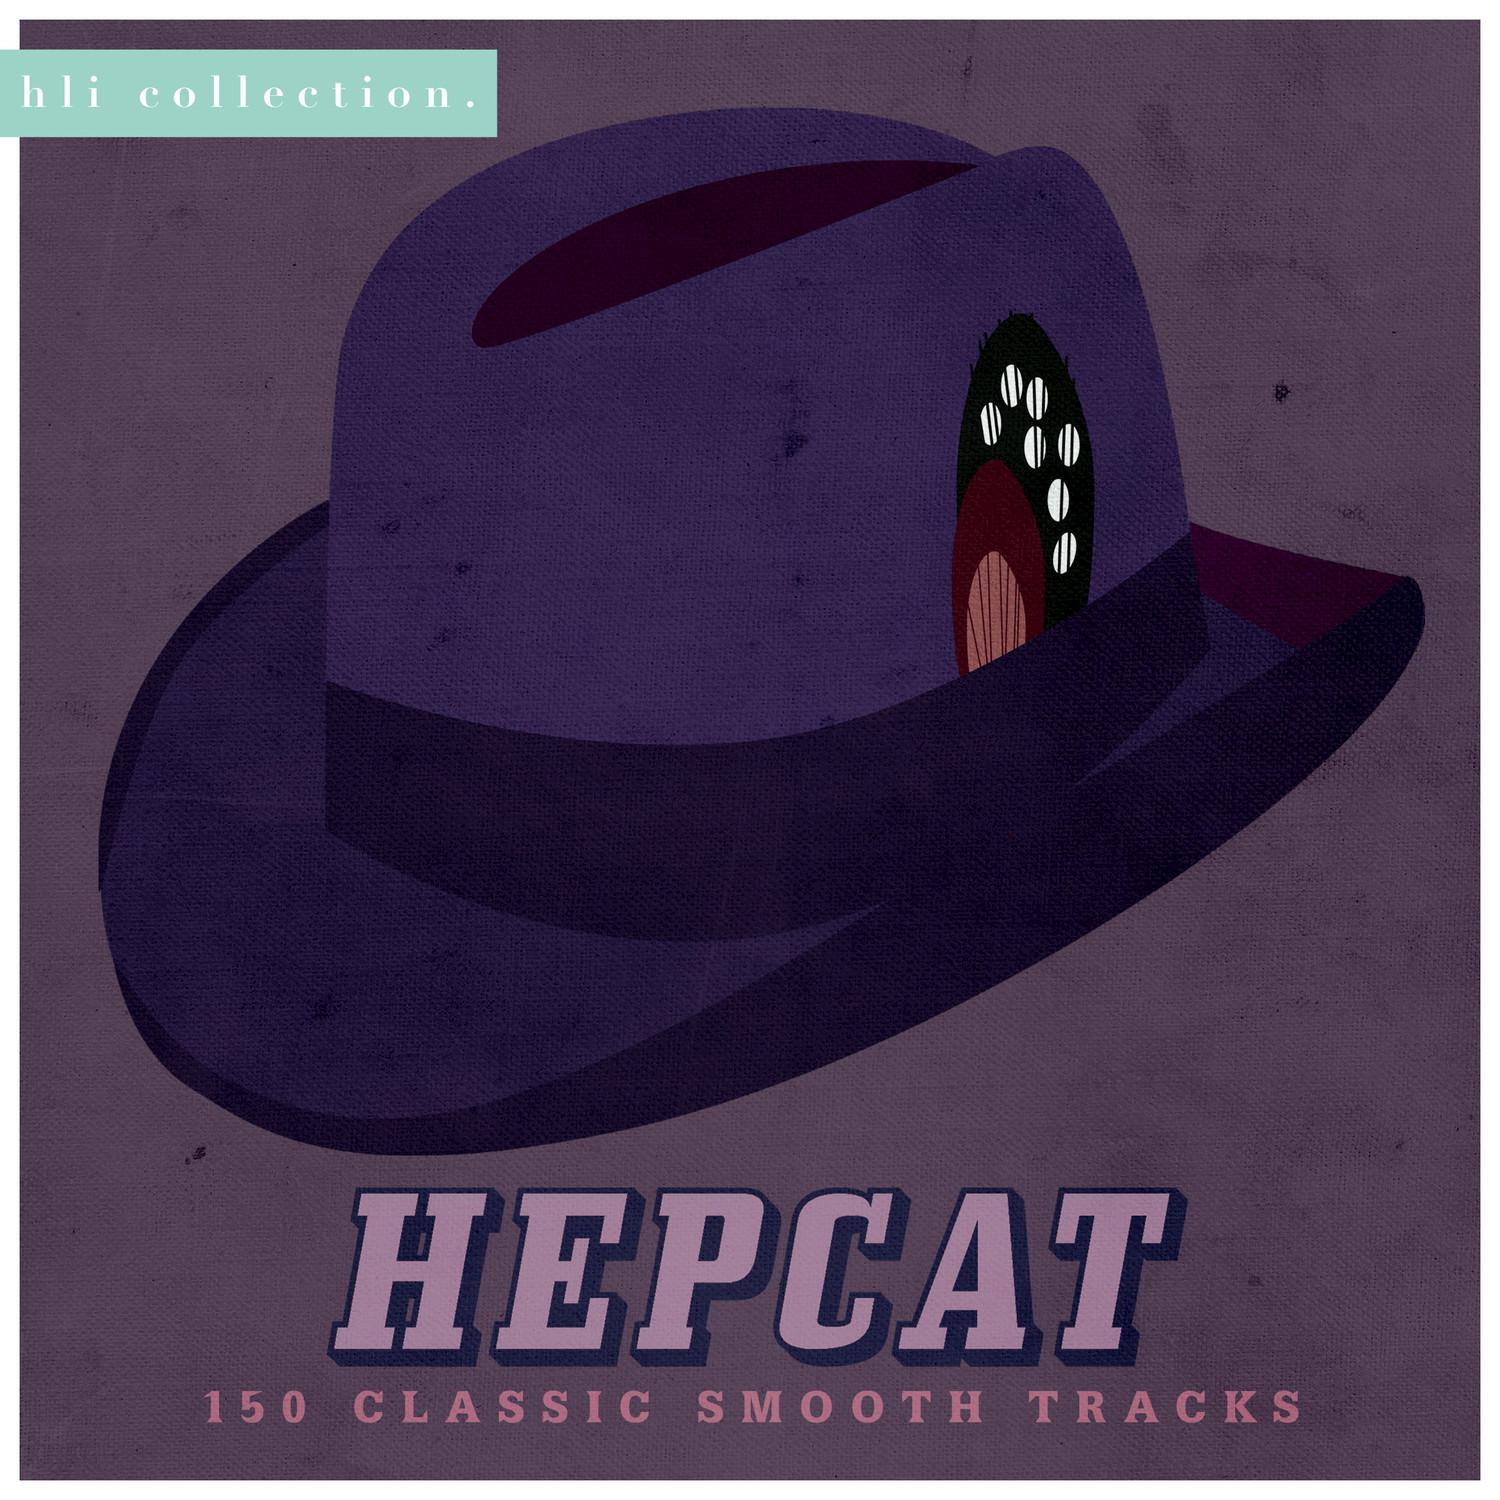 Hepcat - 150 Classic Smooth Tracks